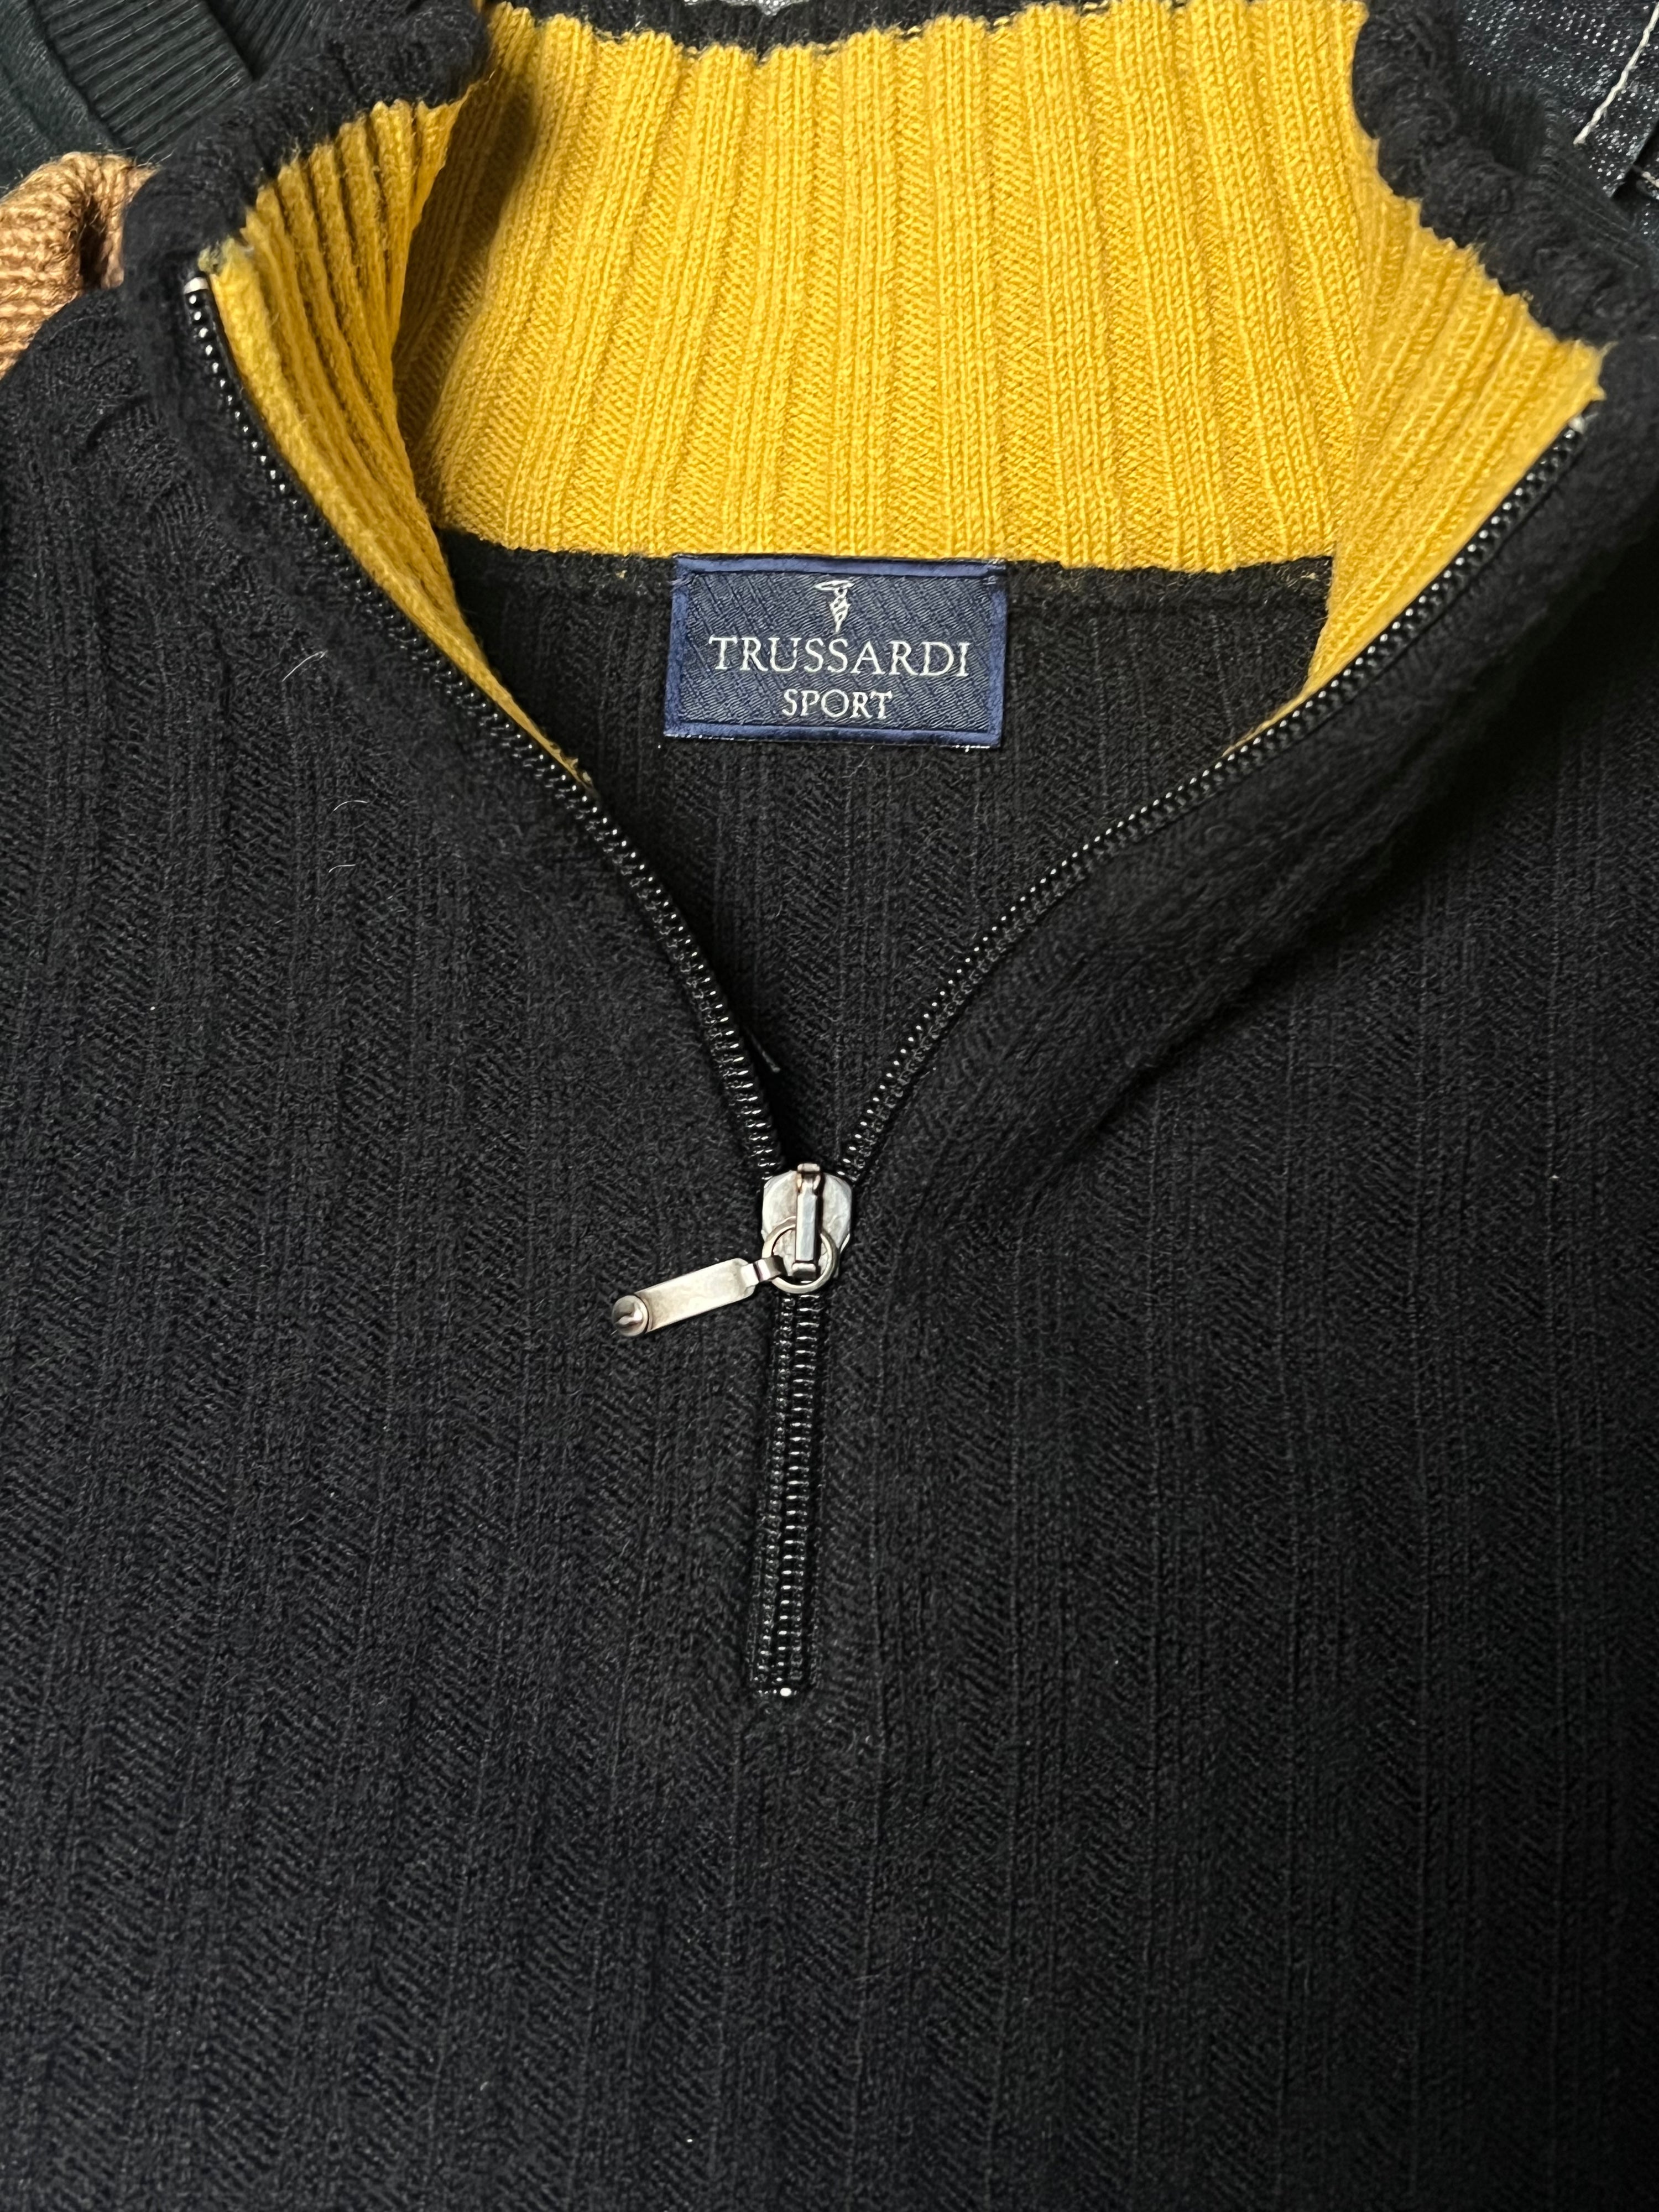 Vintage 90s Trussardi Sport Ribbed 1/4 Zip Knit Sweater (L)